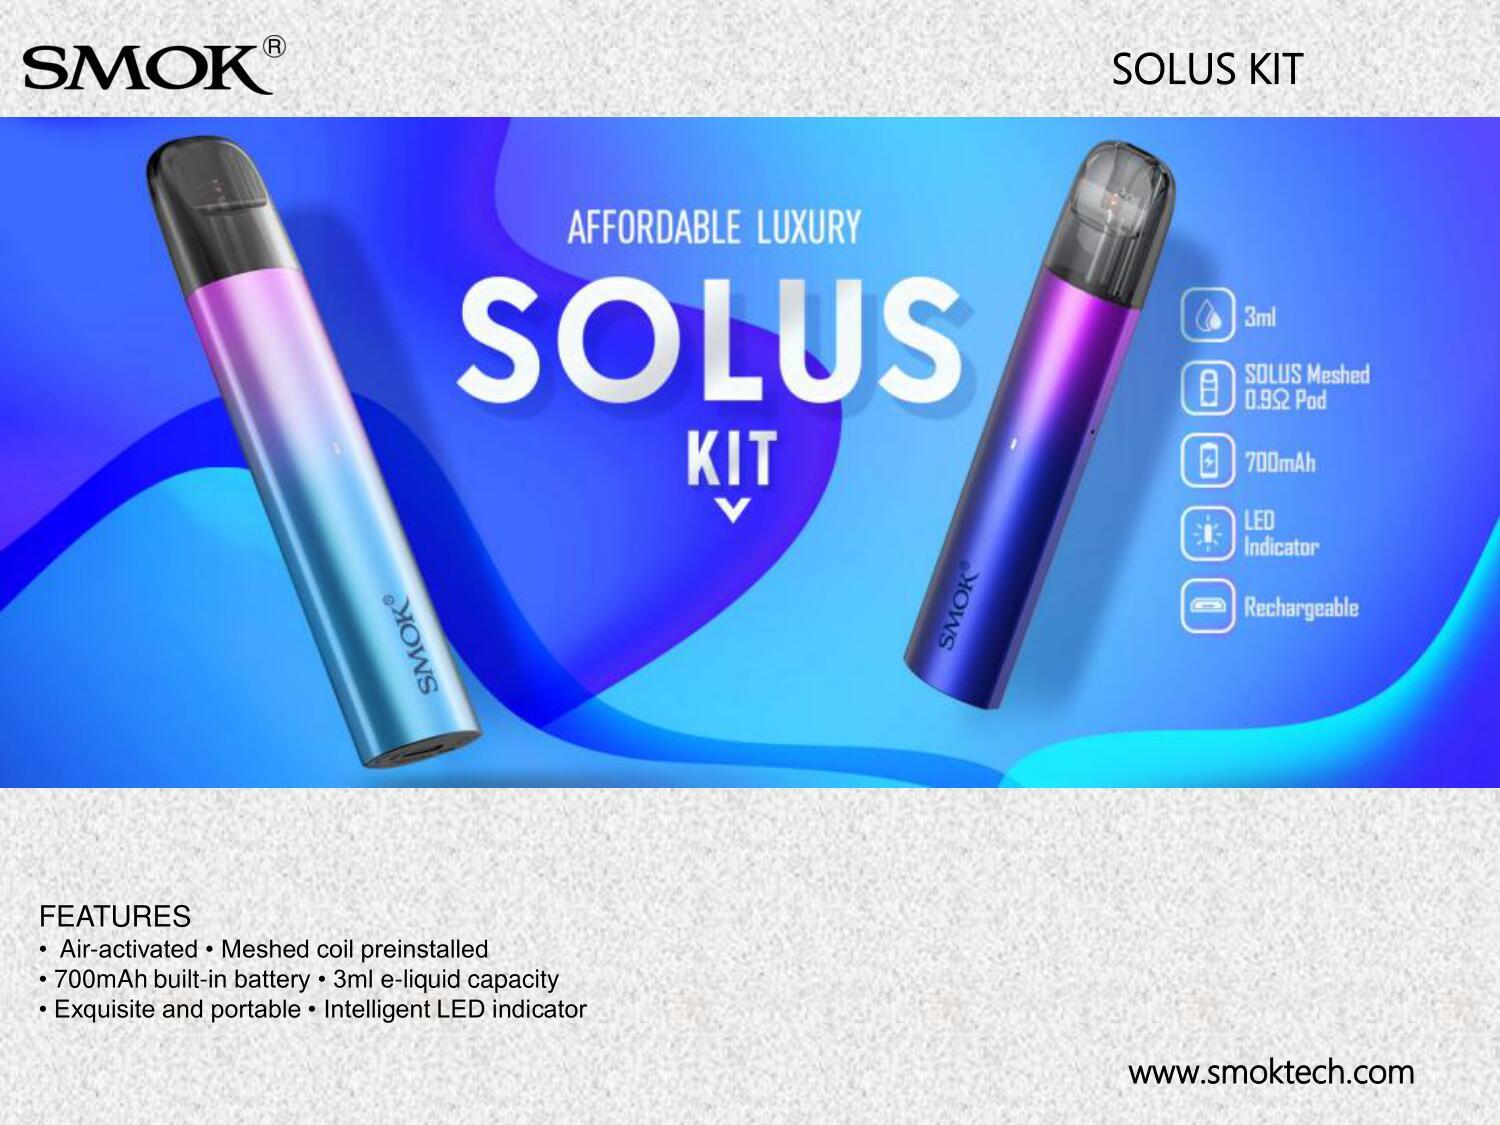 Conversational clothing apparatus סיגריה אלקטרונית רב פעמית SMOK solus kit בצבע אפור